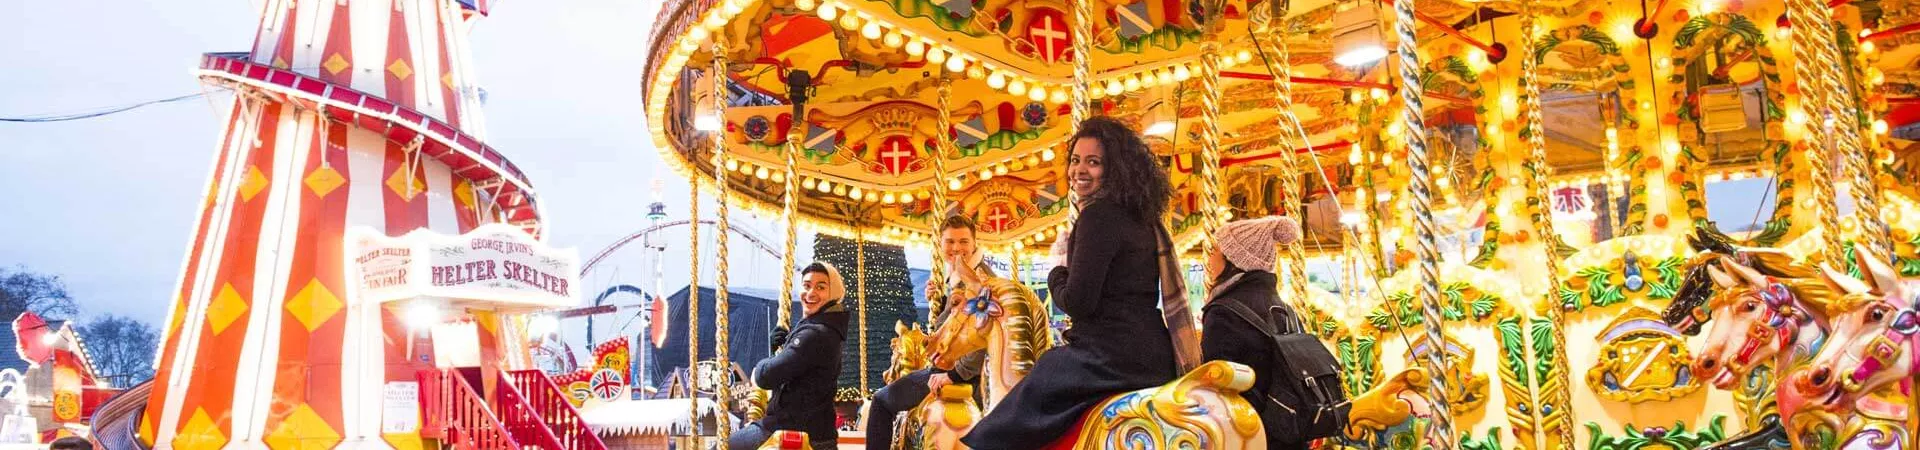 Group On Carousel At Christmas Market London 0143EURW2018